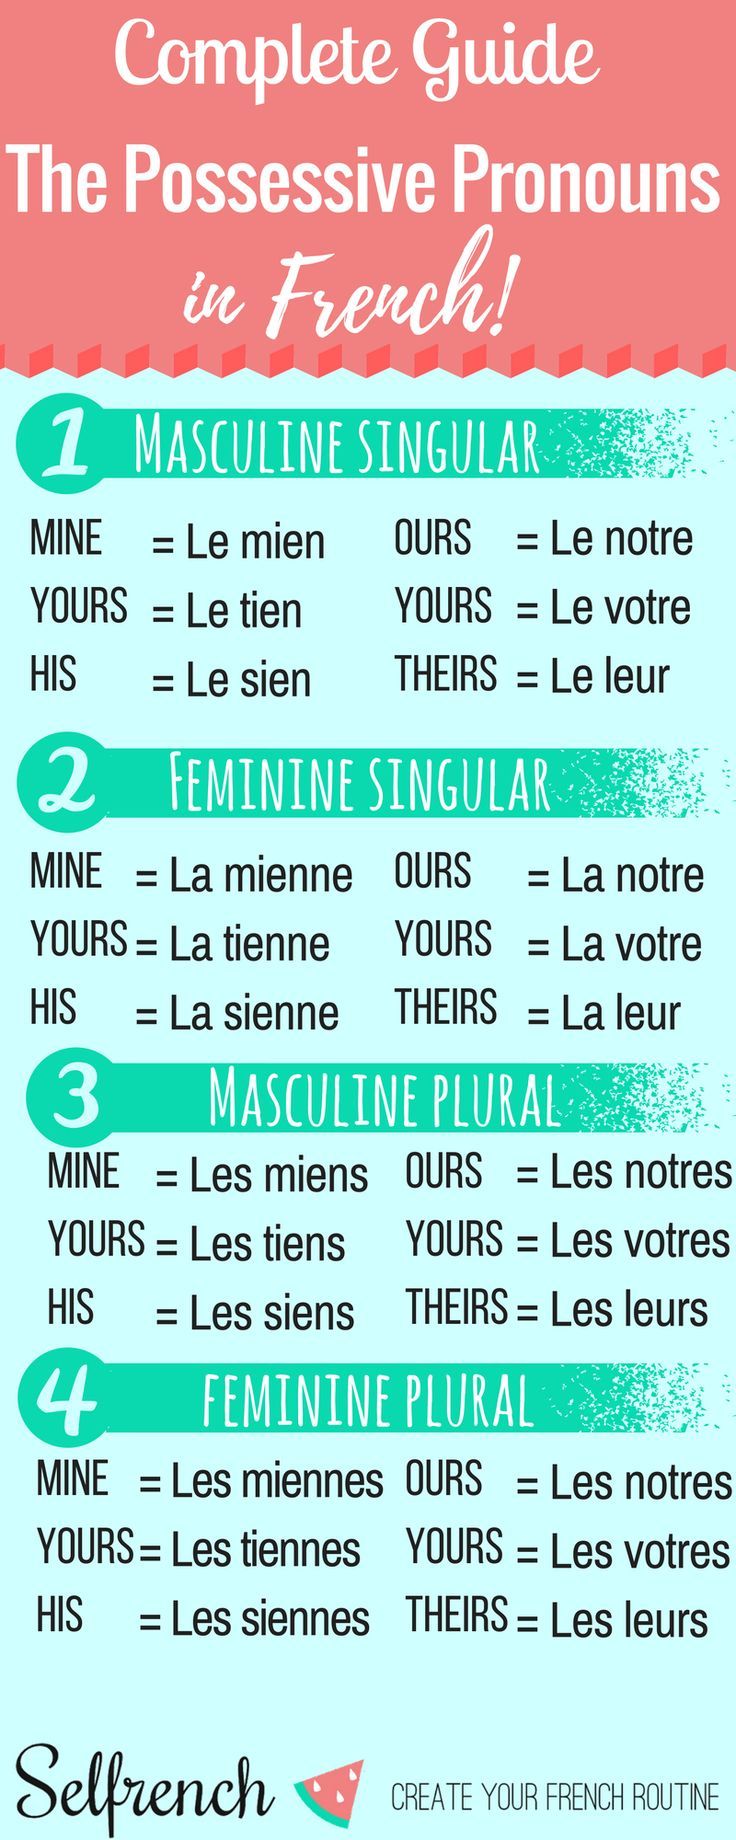 educational-infographic-the-possessive-pronouns-in-french-les-pronoms-possessif-en-fran-ais